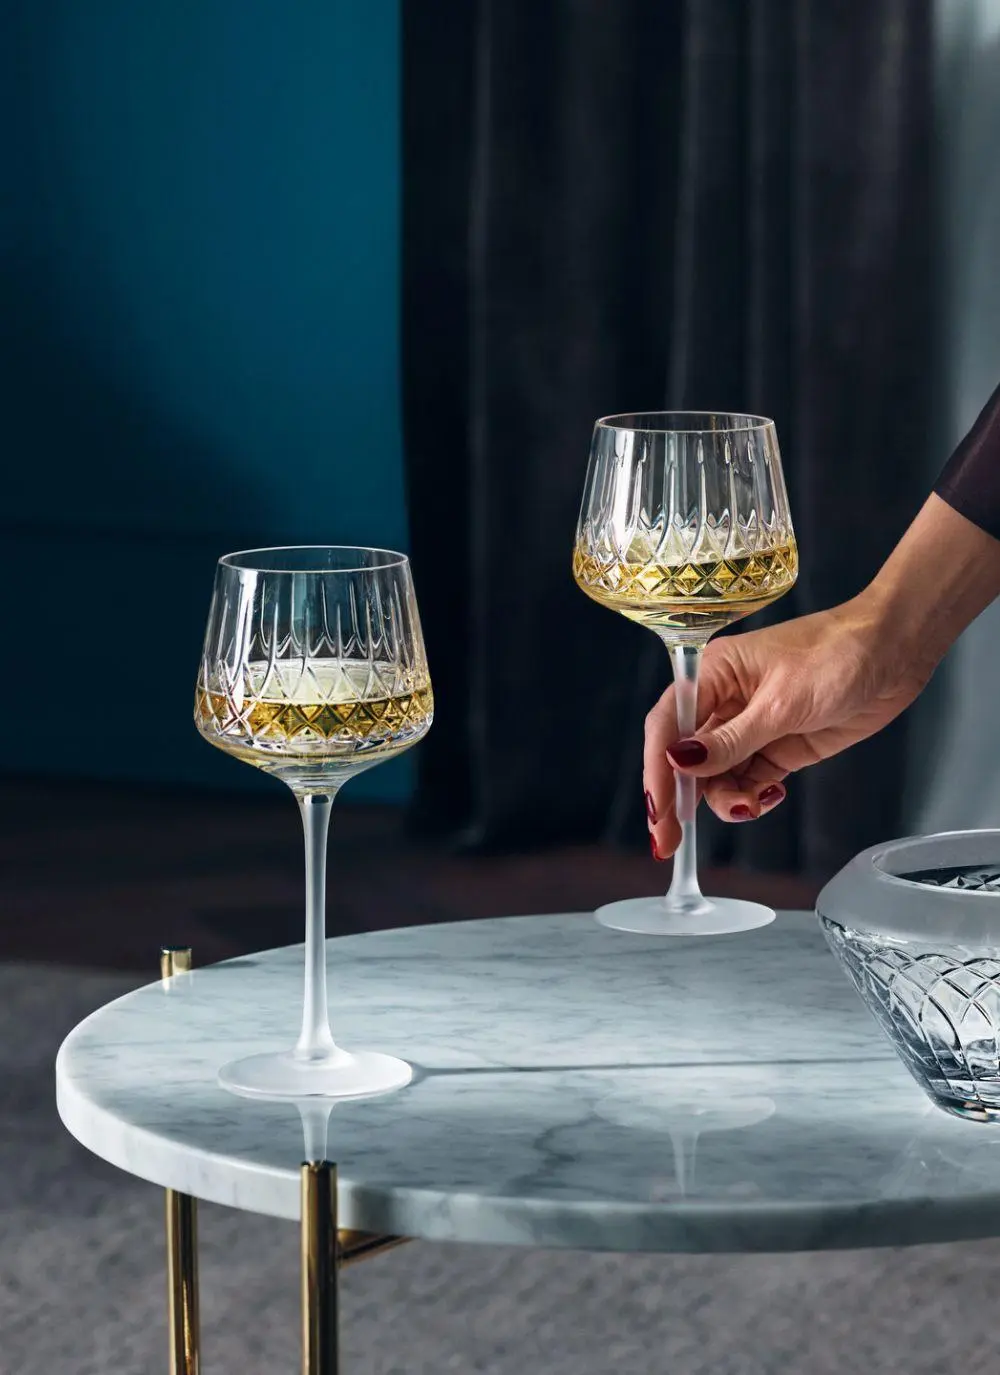 Waterford Crystal Lismore Arcus Wine Glasses Set of 2